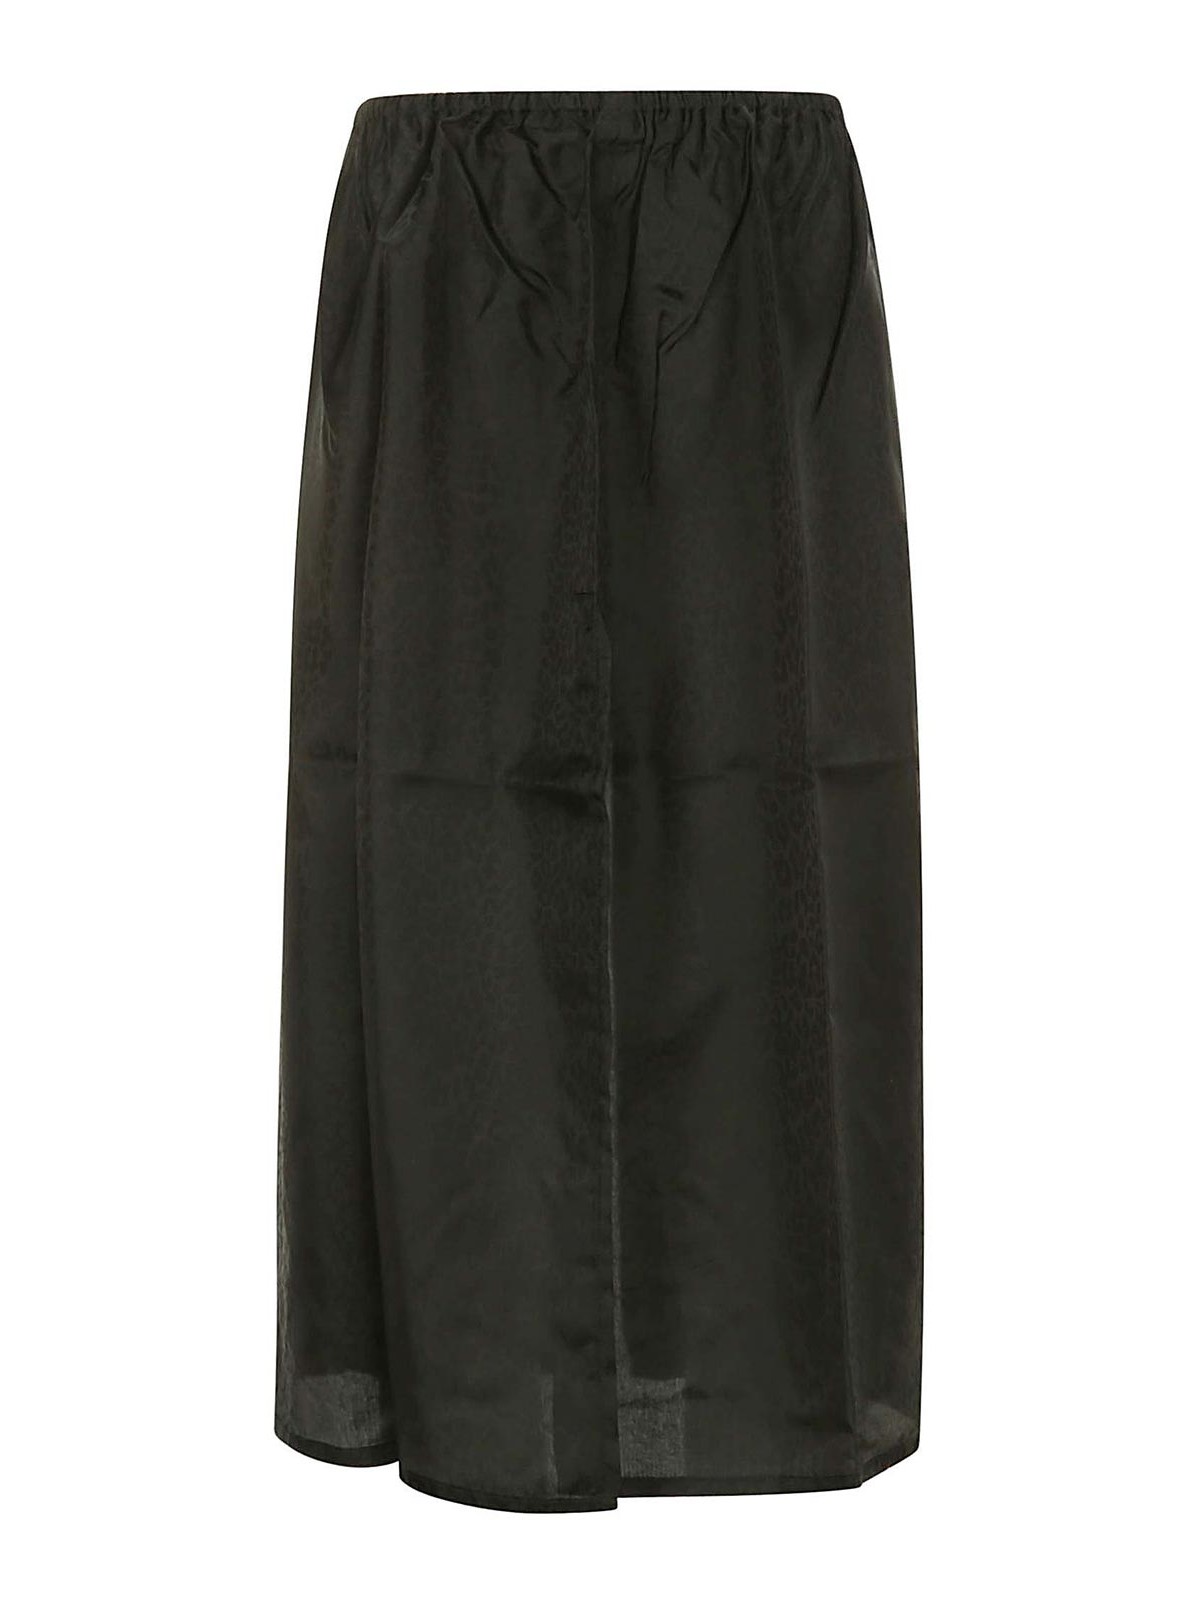 Shop Random Identities Black Skirt